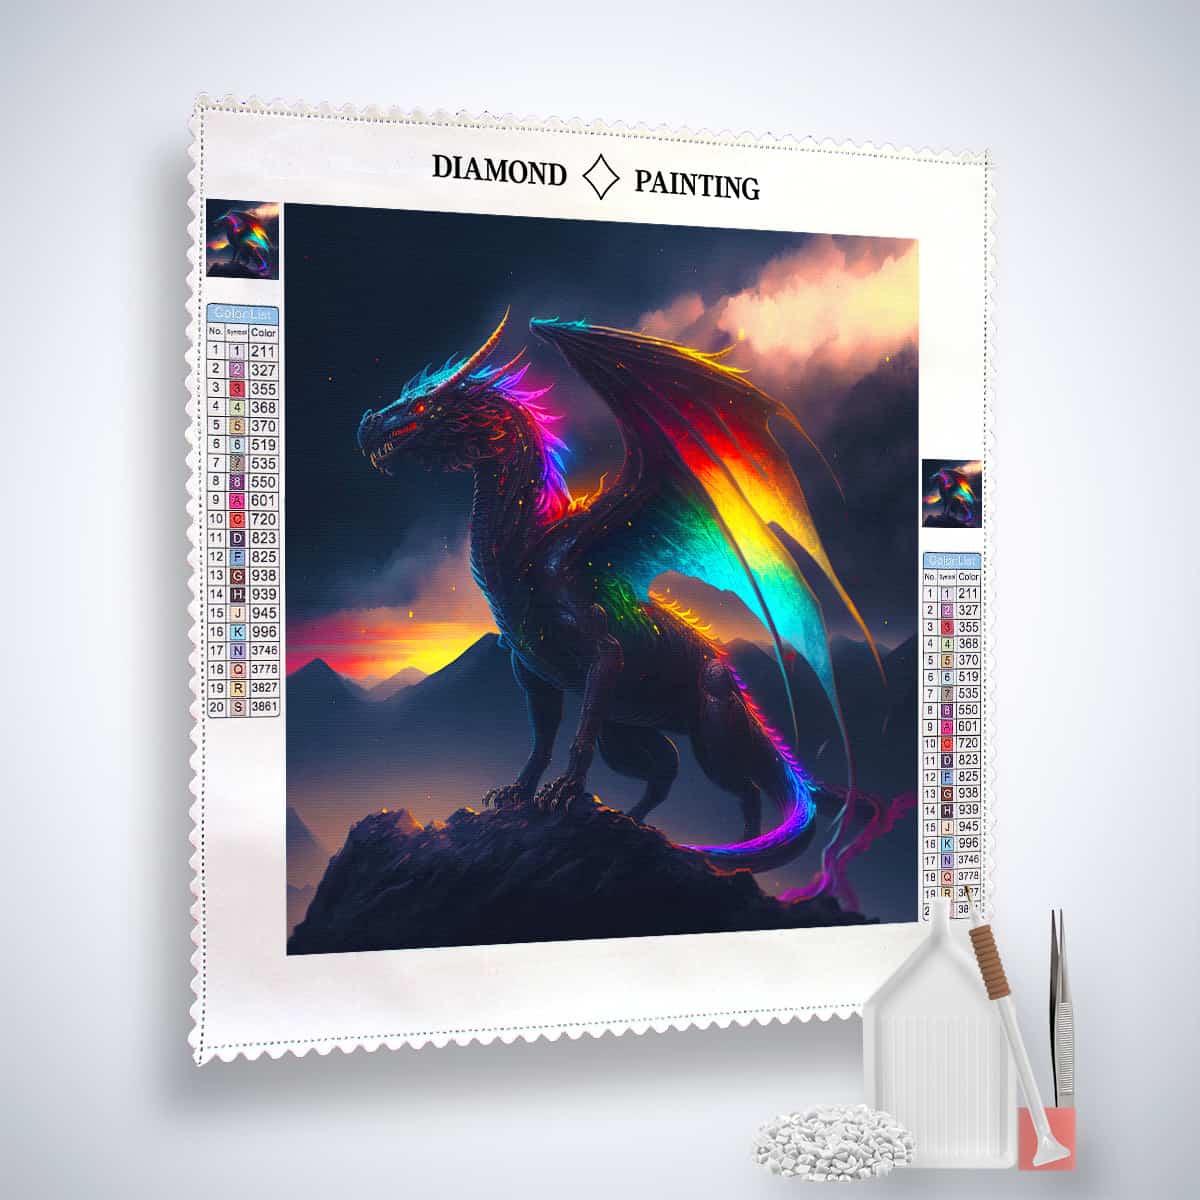 Diamond Painting - Drachenschatten - gedruckt in Ultra-HD - Drachen, Fantasy, Neu eingetroffen, Quadratisch